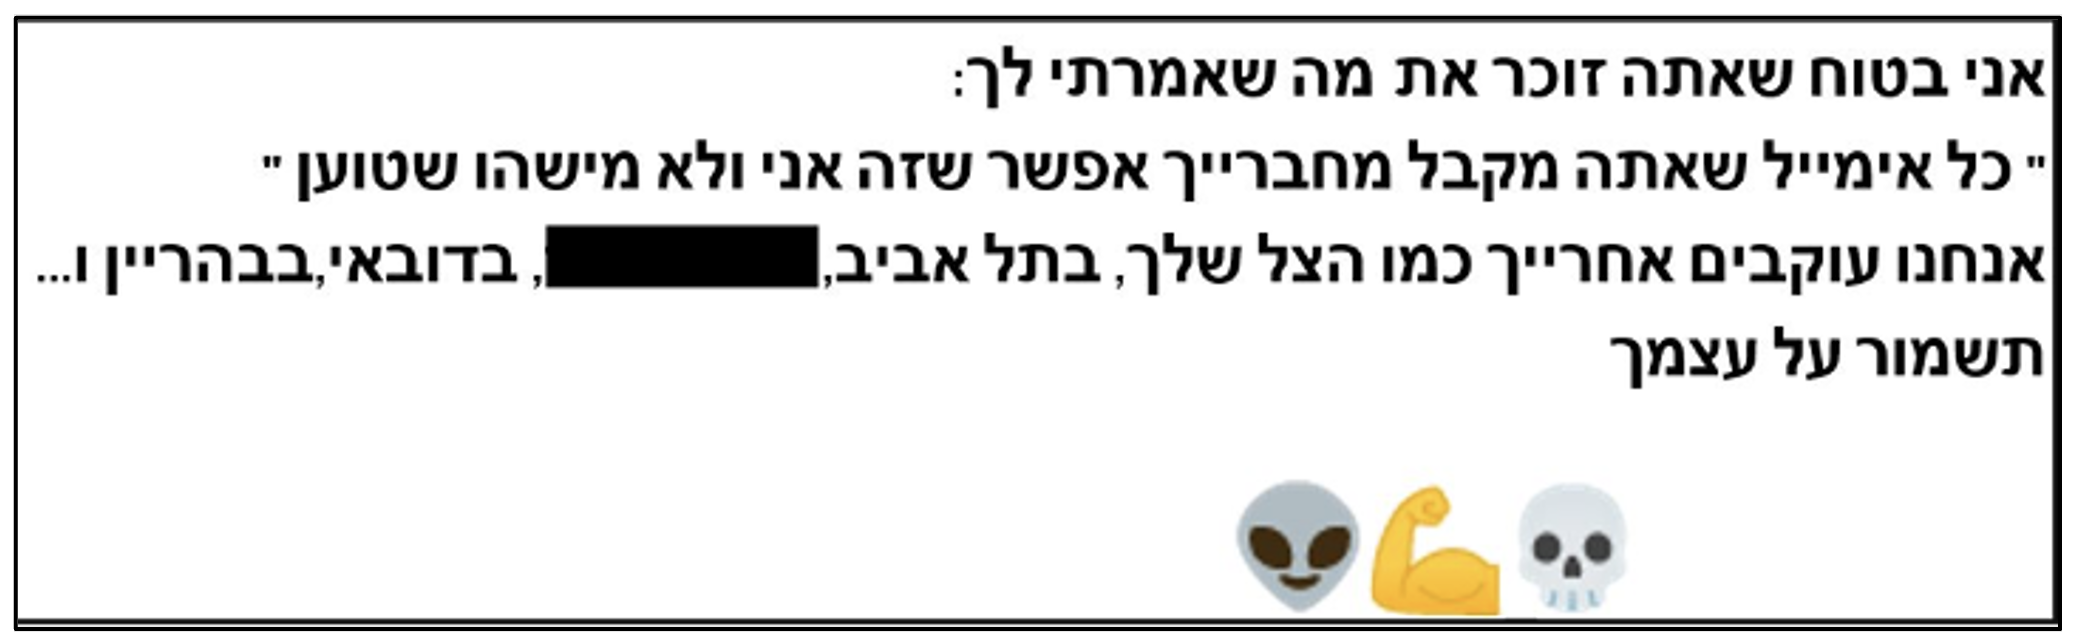 TA453’s aggressive messaging in Hebrew